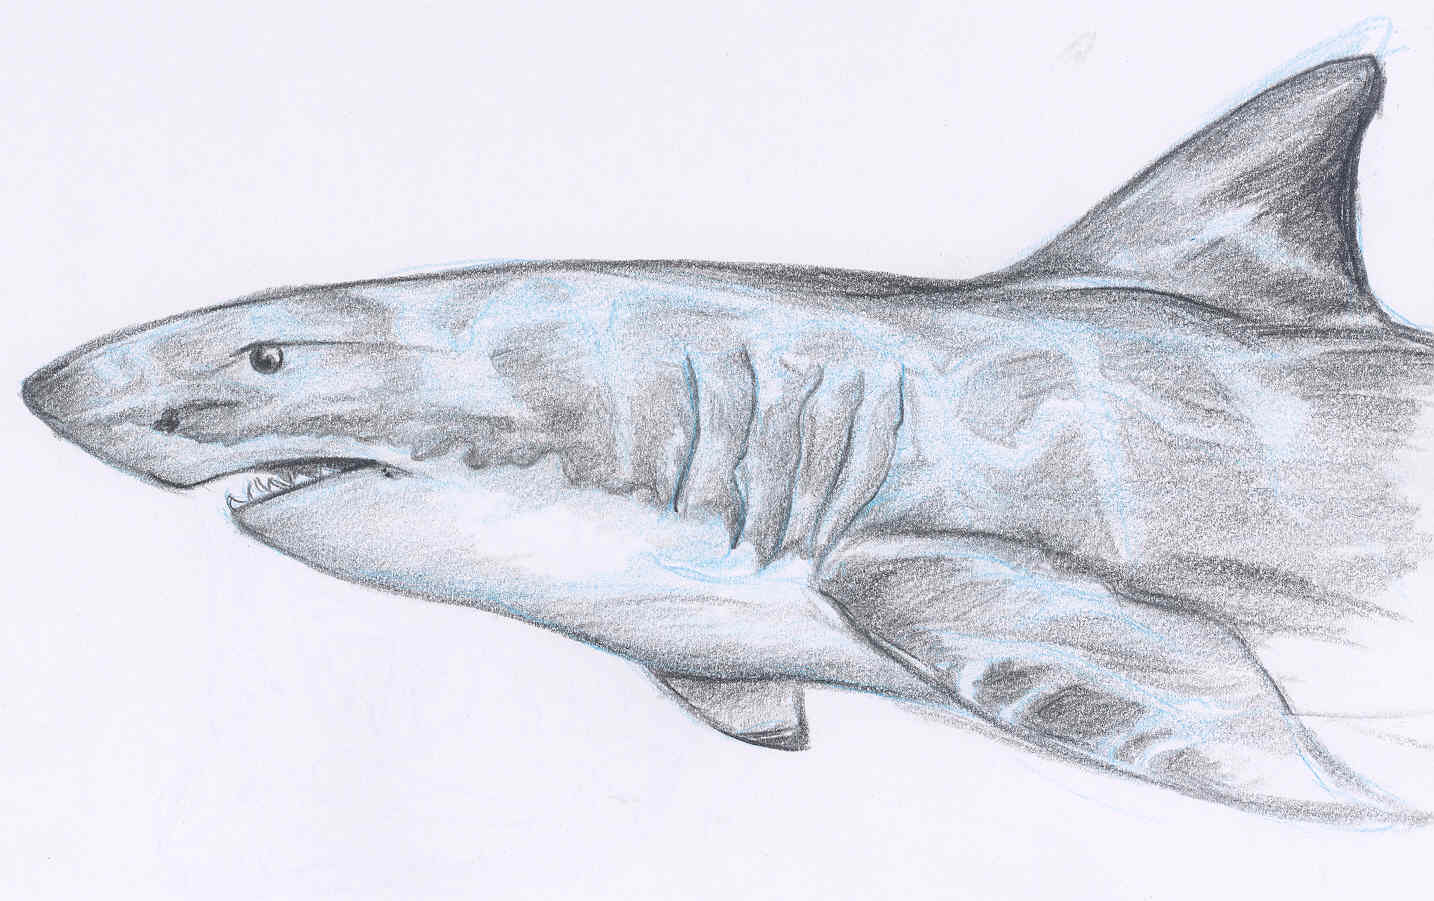 A Shark Sketchie